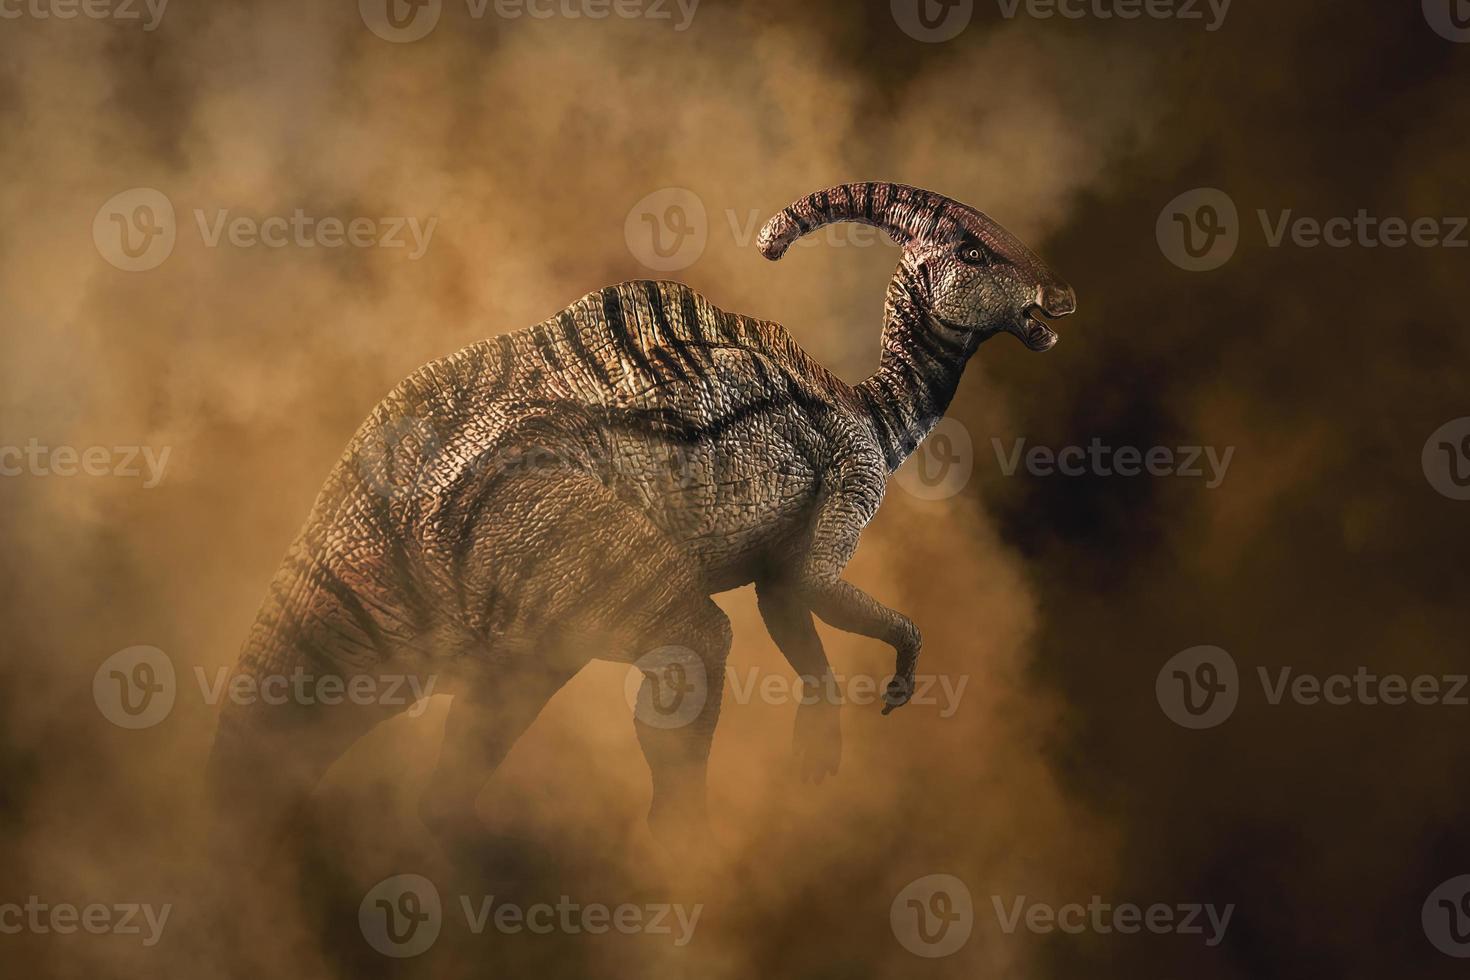 dinosaure parasaurolophus sur fond de fumée photo